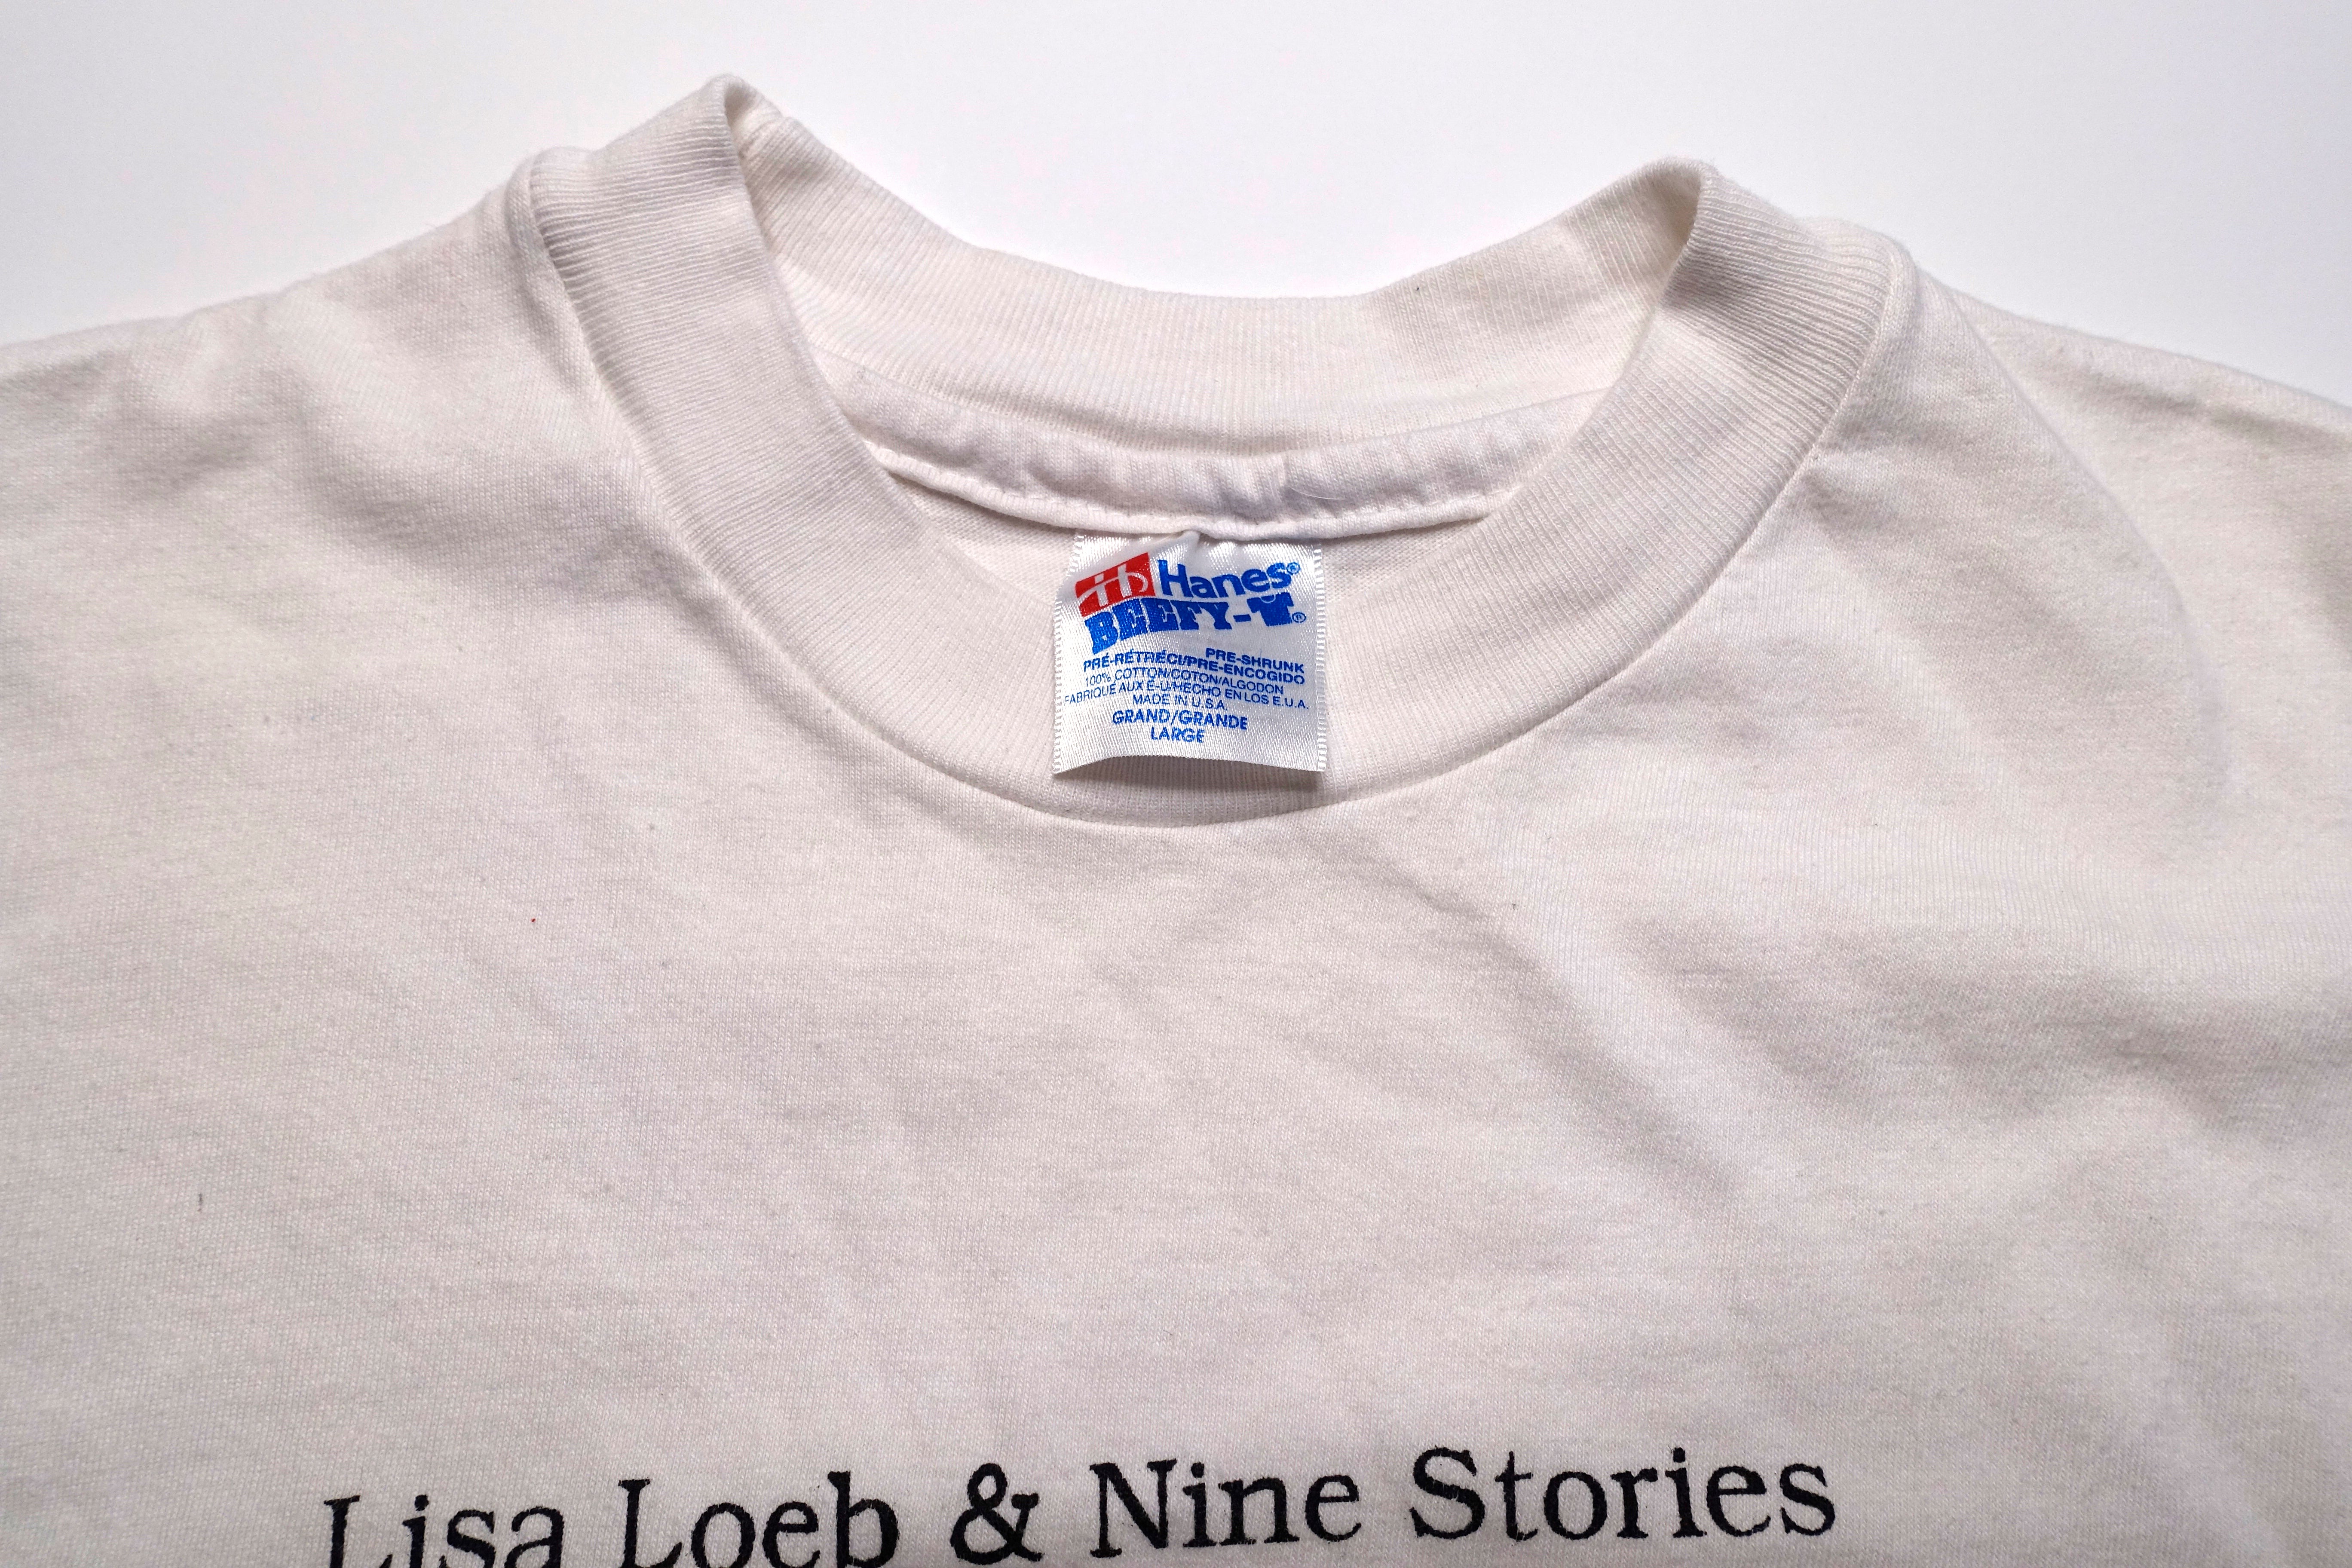 Lisa Loeb & Nine Stories – Tails 1995 Tour Shirt Size Large